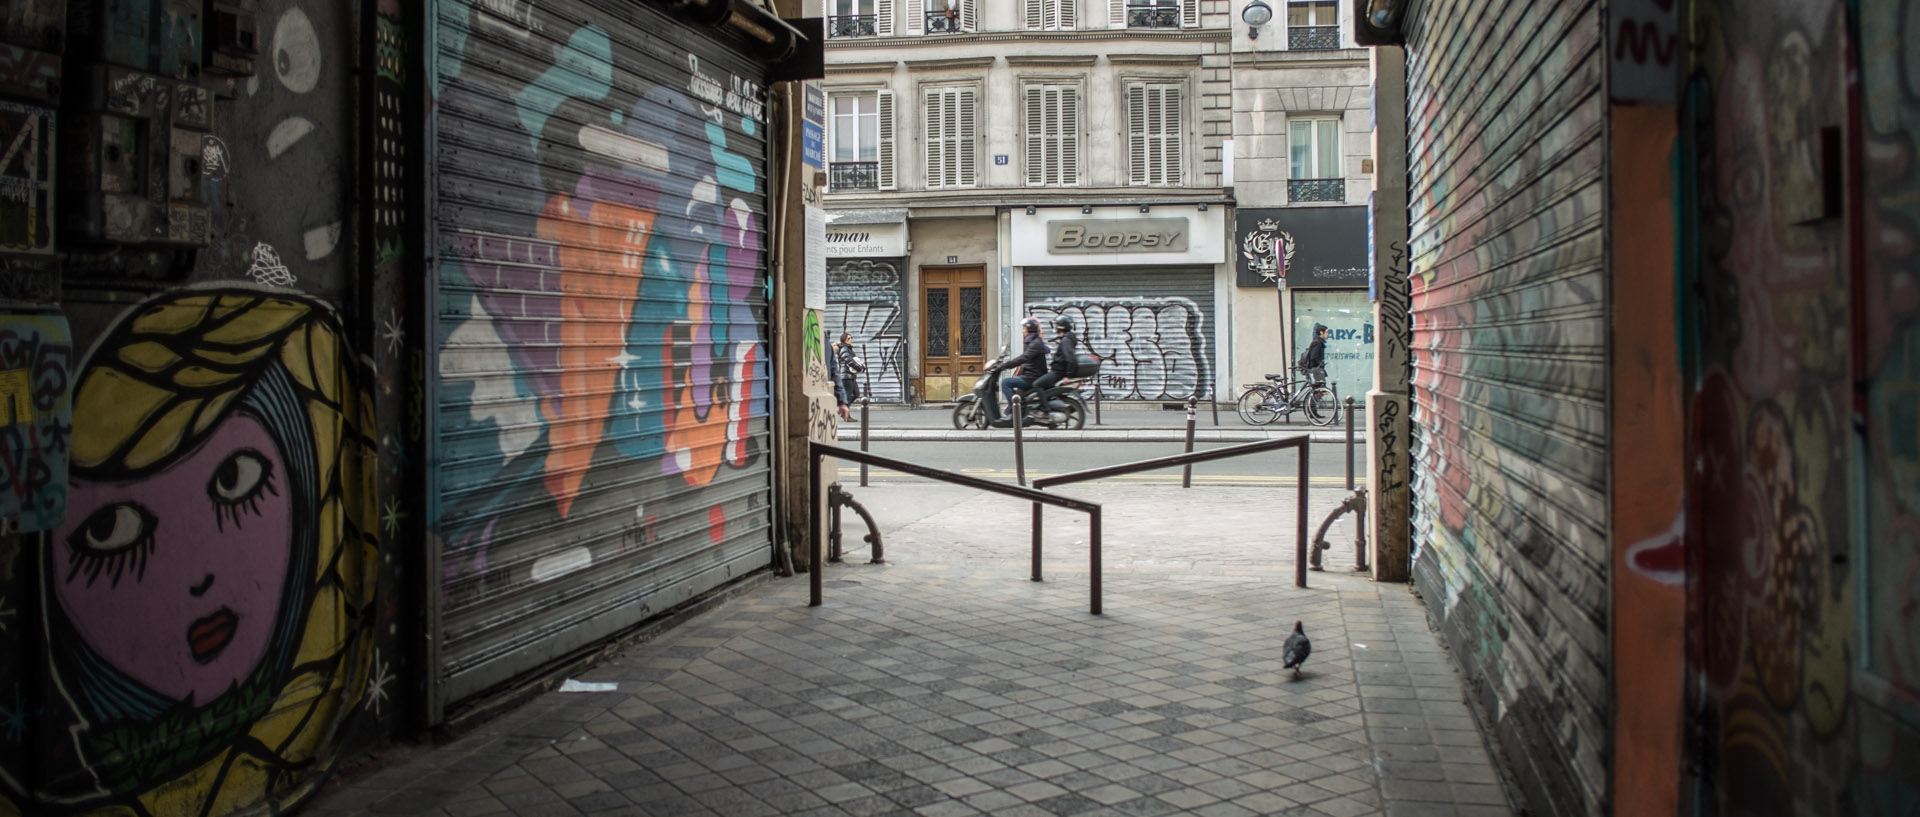 Jeudi 27 mars 2014, 15:14, rue du Faubourg Saint-Martin, Paris